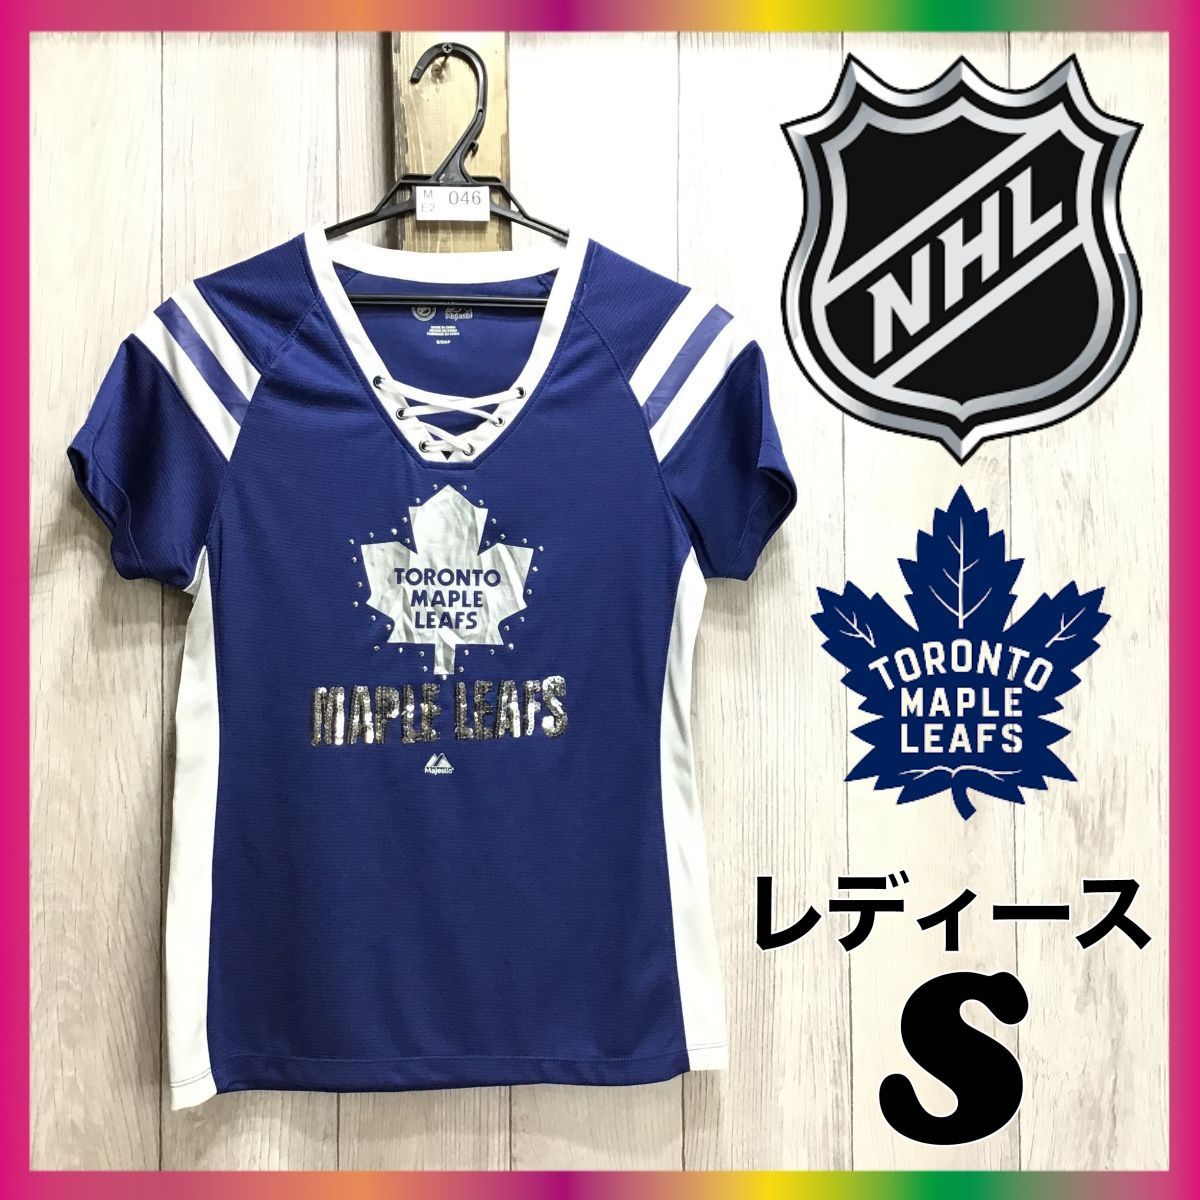 Auston Matthews トロントメープルリーフス (Toronto Maple Leafs) NHL